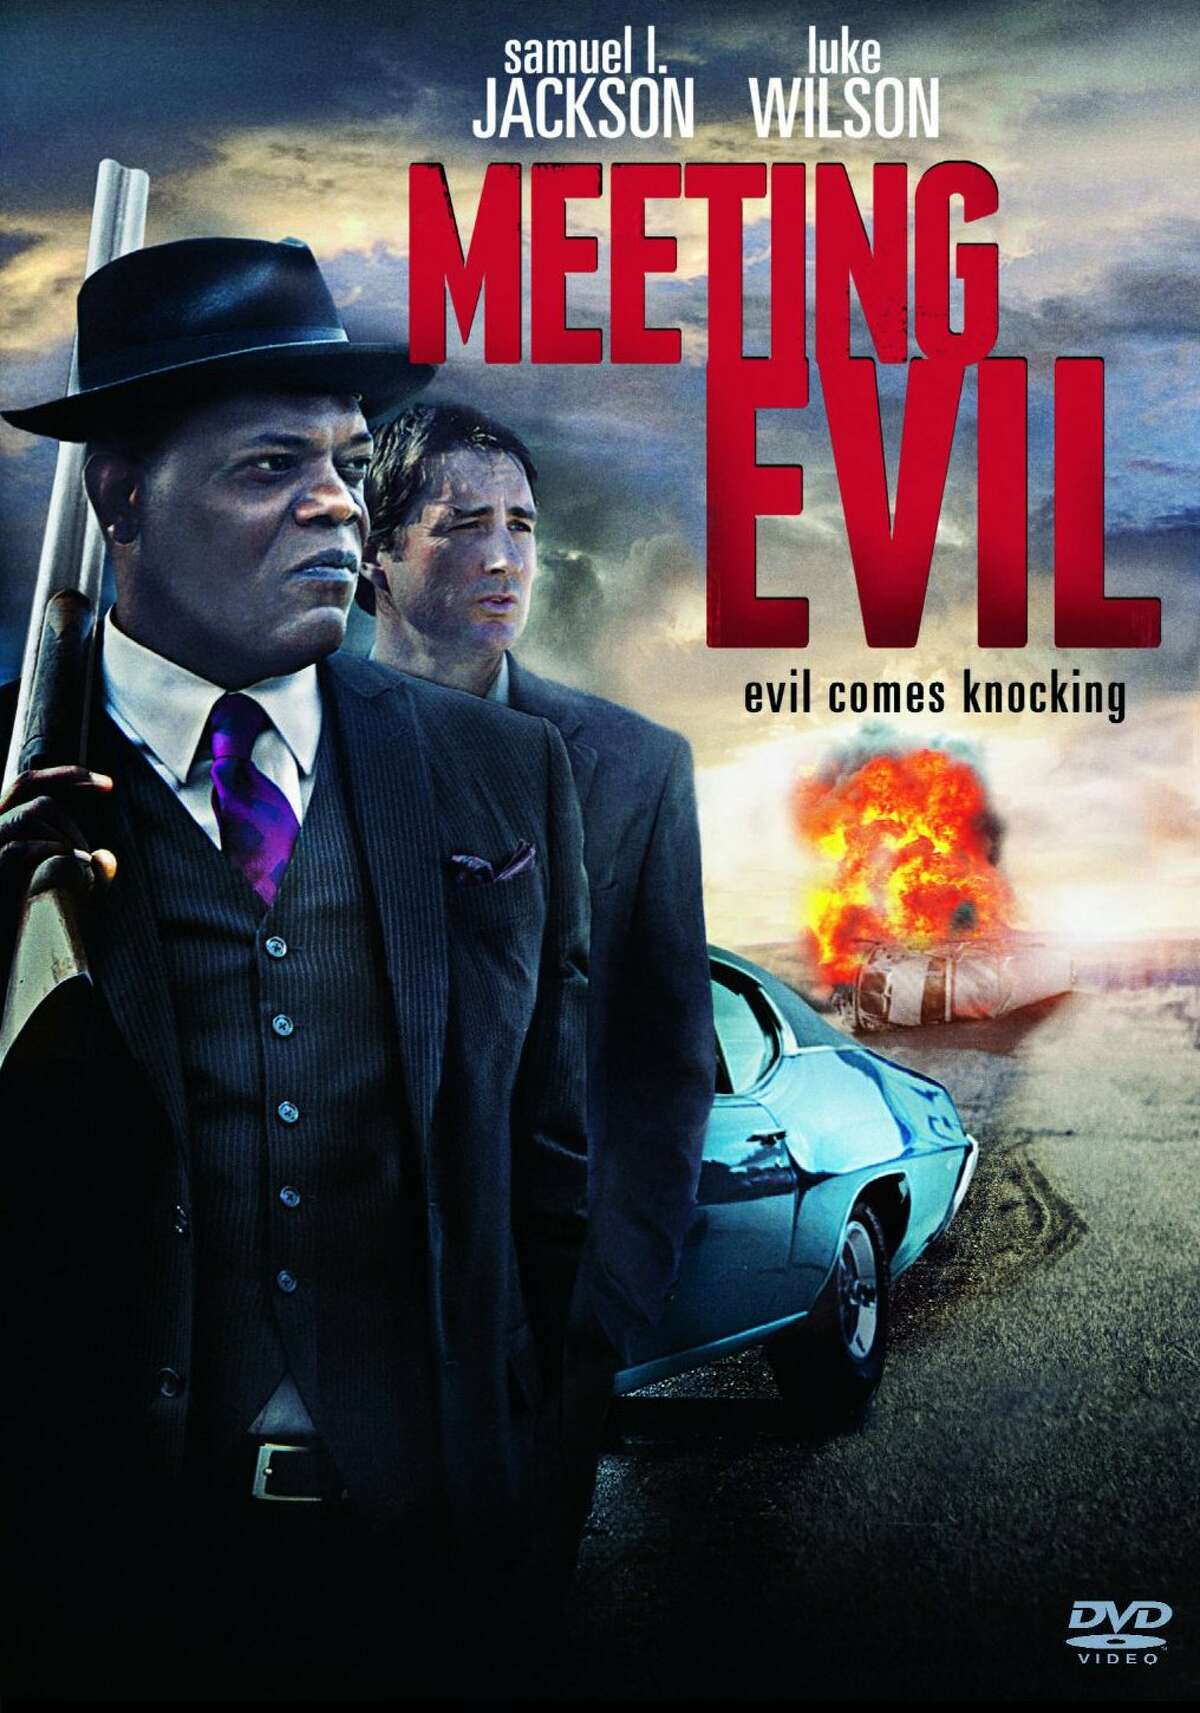 "Meeting Evil"